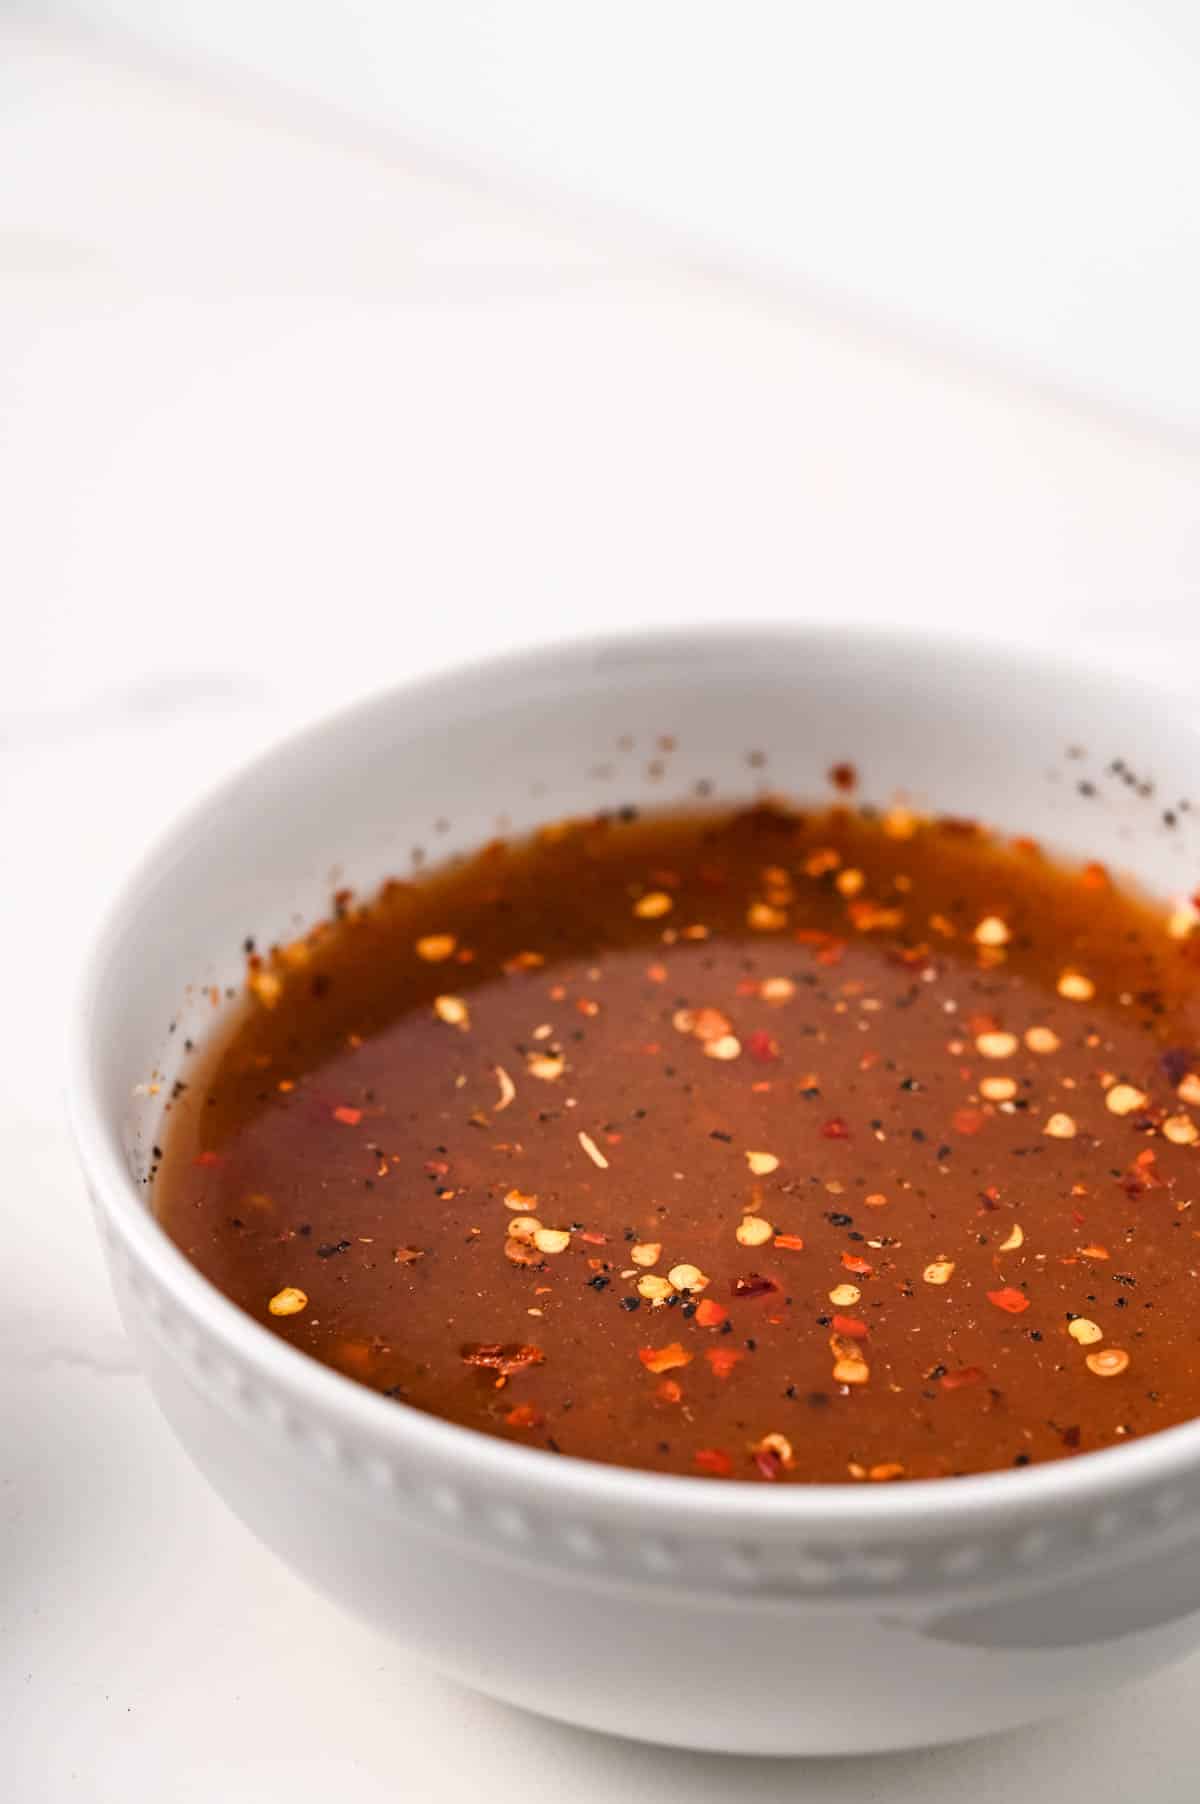 Carolina-style vinegar sauce for pulled pork in a white bowl.